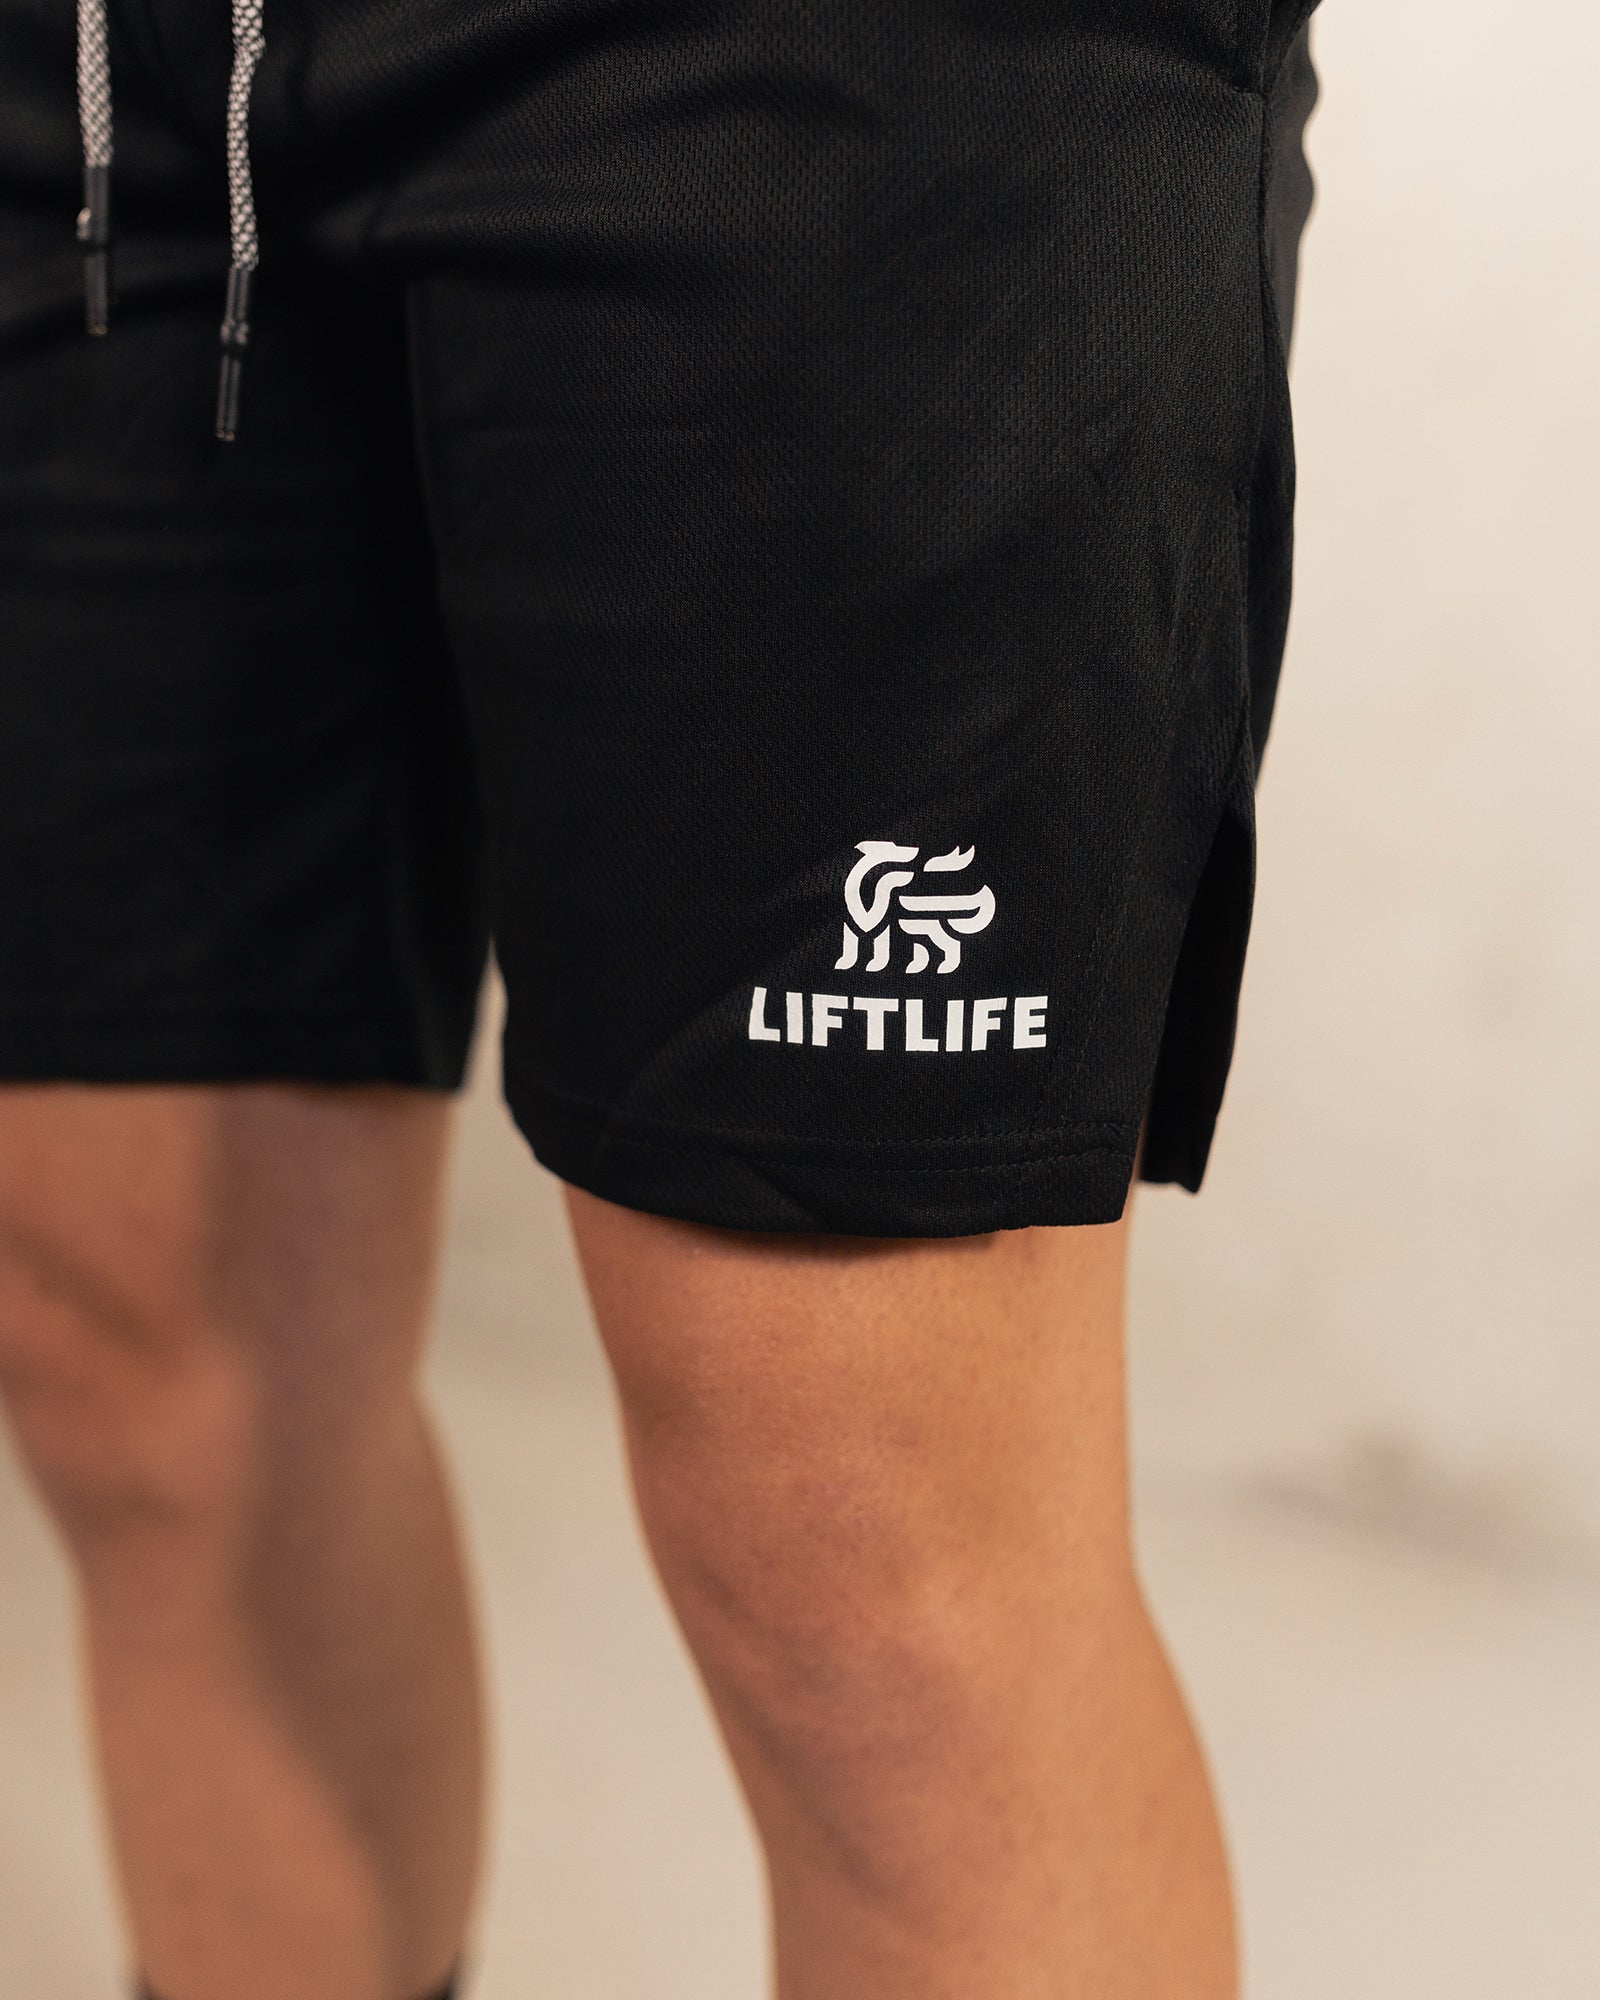 liftlife-performance-shorts-2.jpg